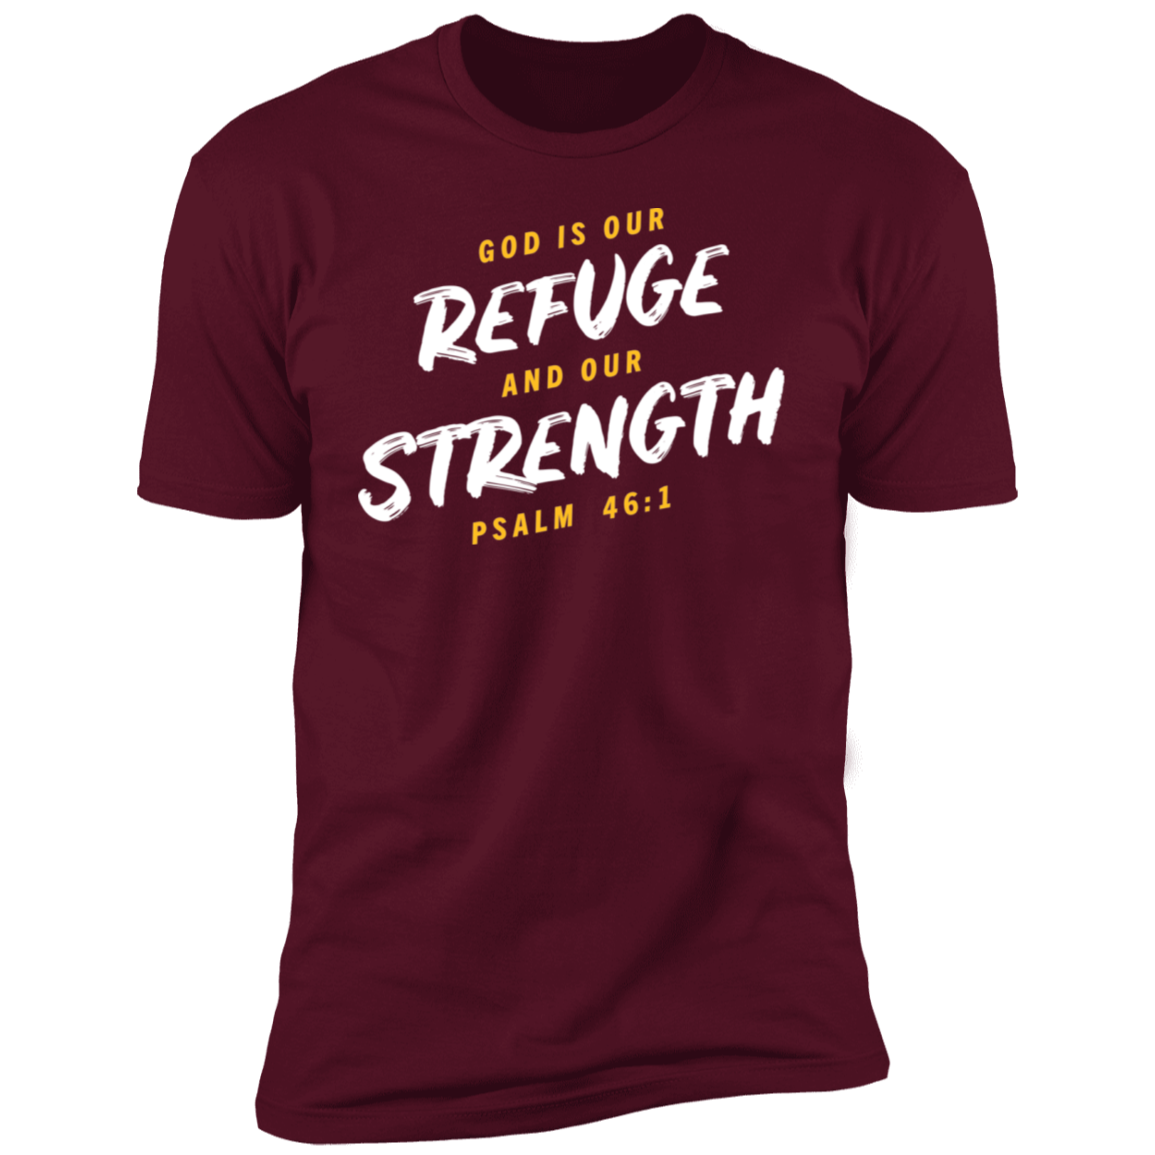 Refuge and Strength | Men’s T-Shirt